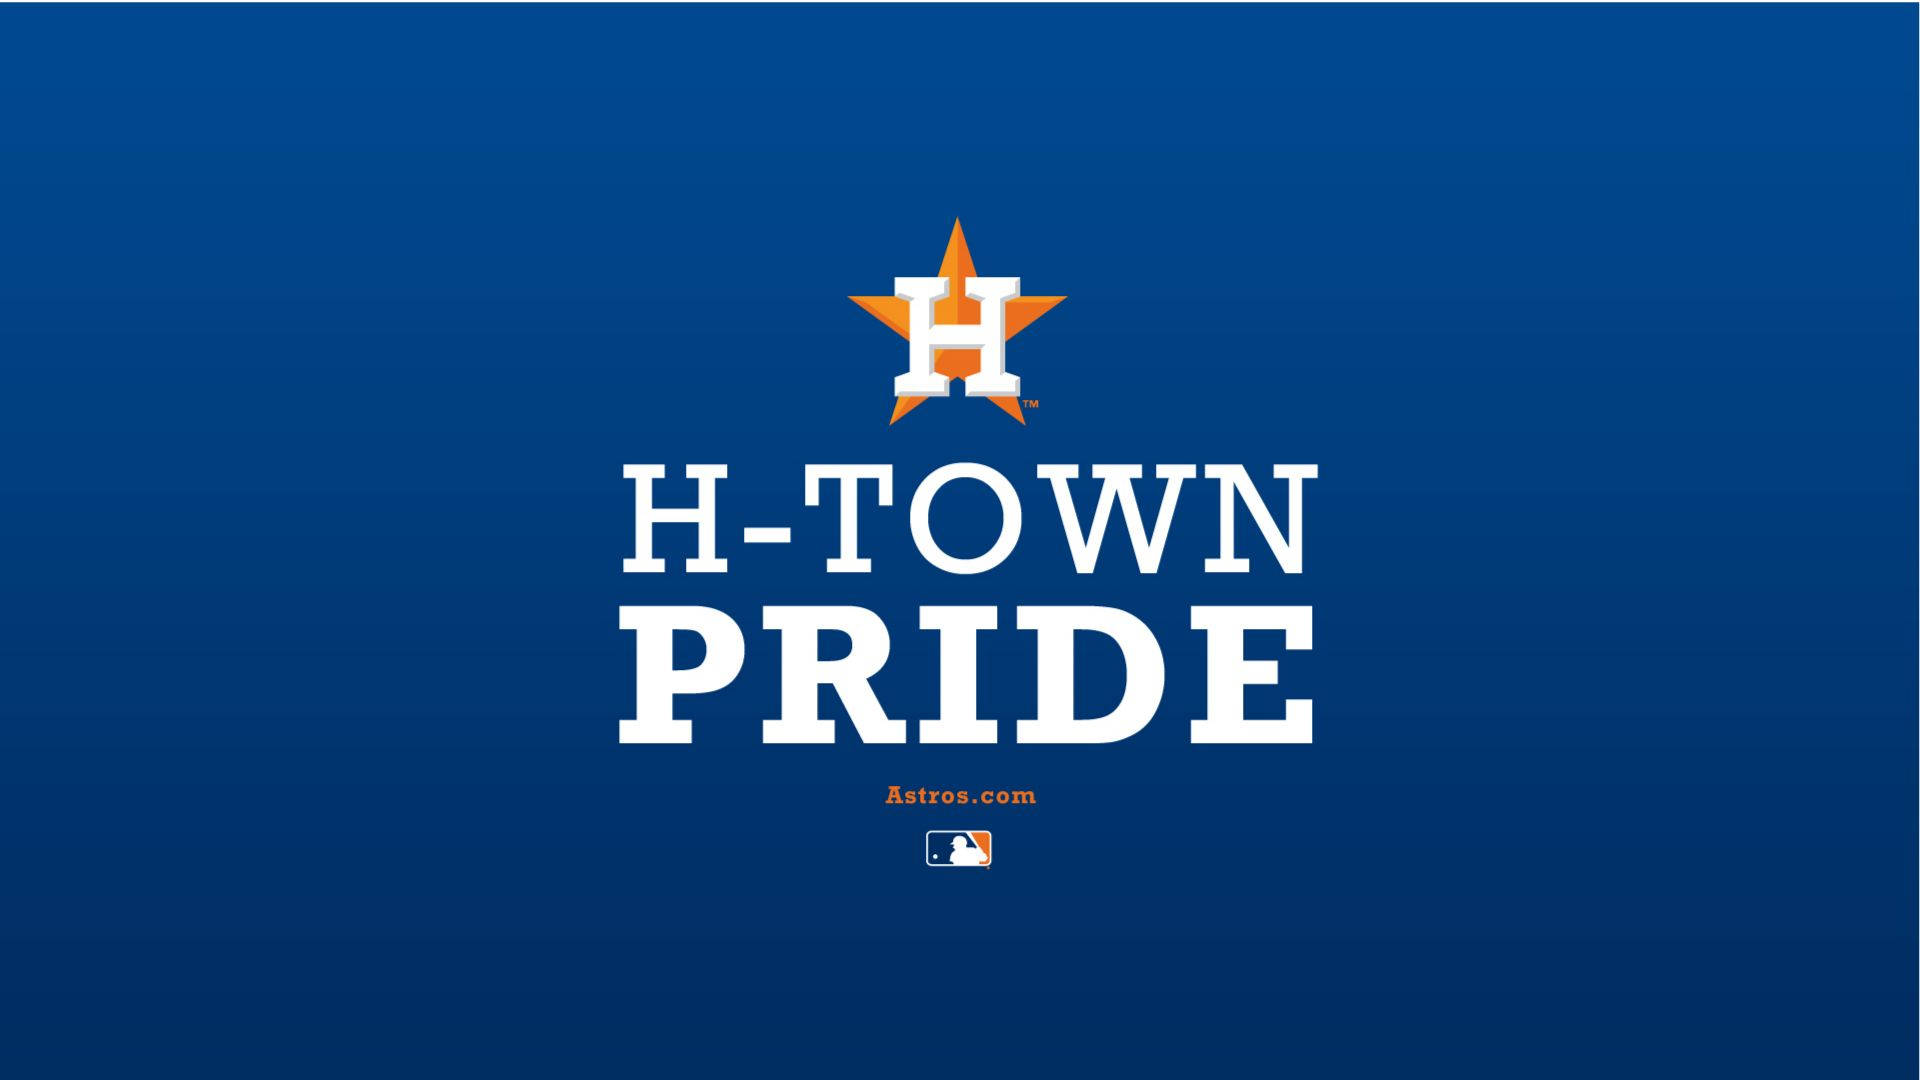 Houston Astros H-Town Pride Wallpaper